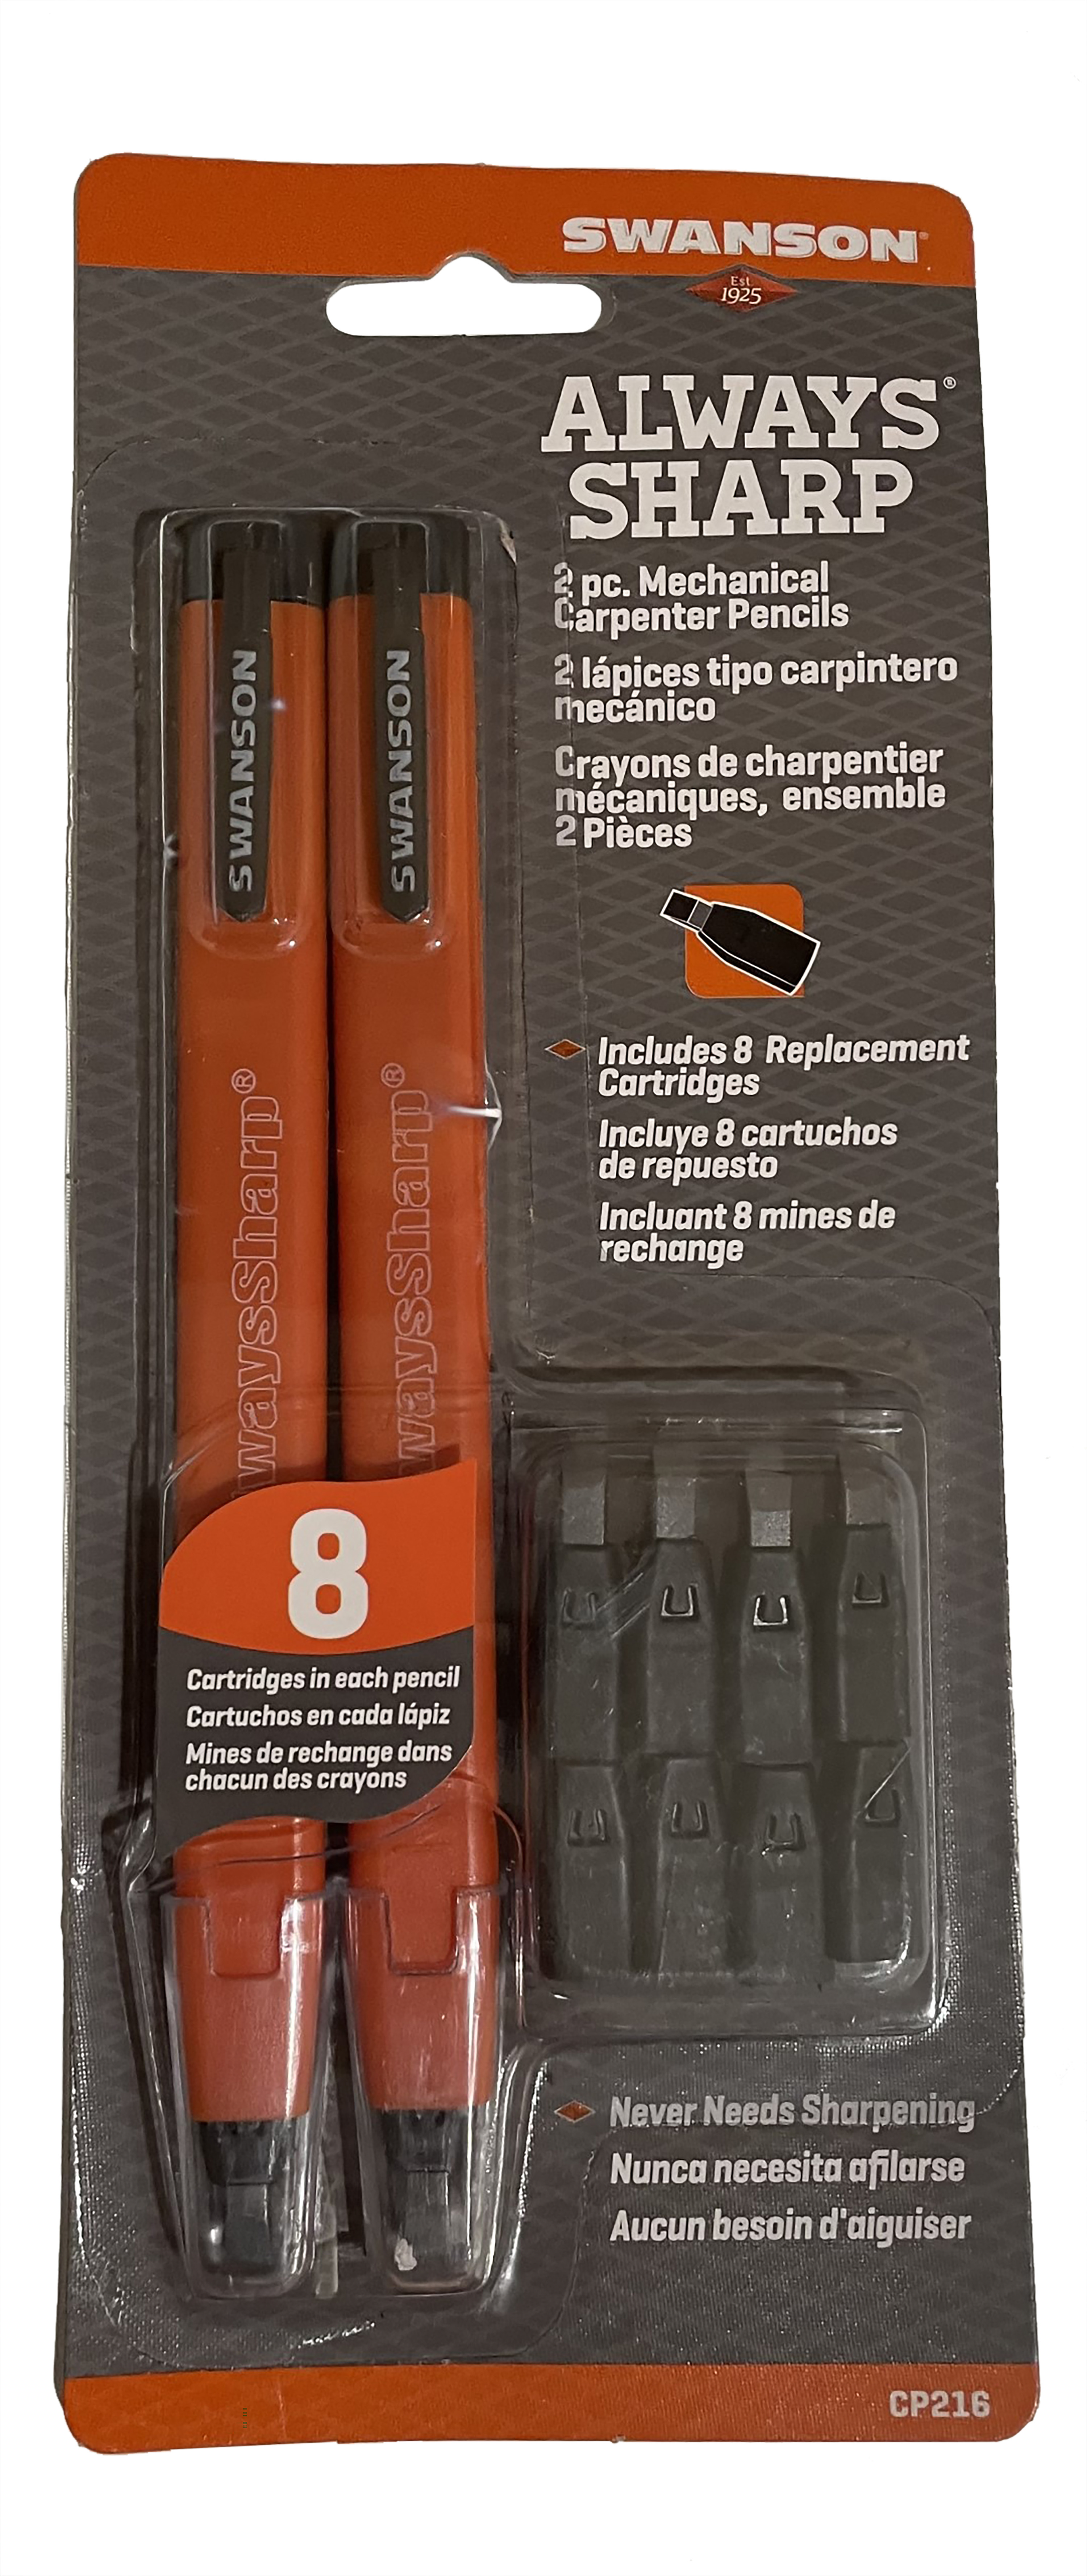 Swanson Tool Co's "AlwaysSharp" Refillable Mechanical Carpenter Pencils w/ Black Graphite Tips, Model CP216 - image 2 of 11